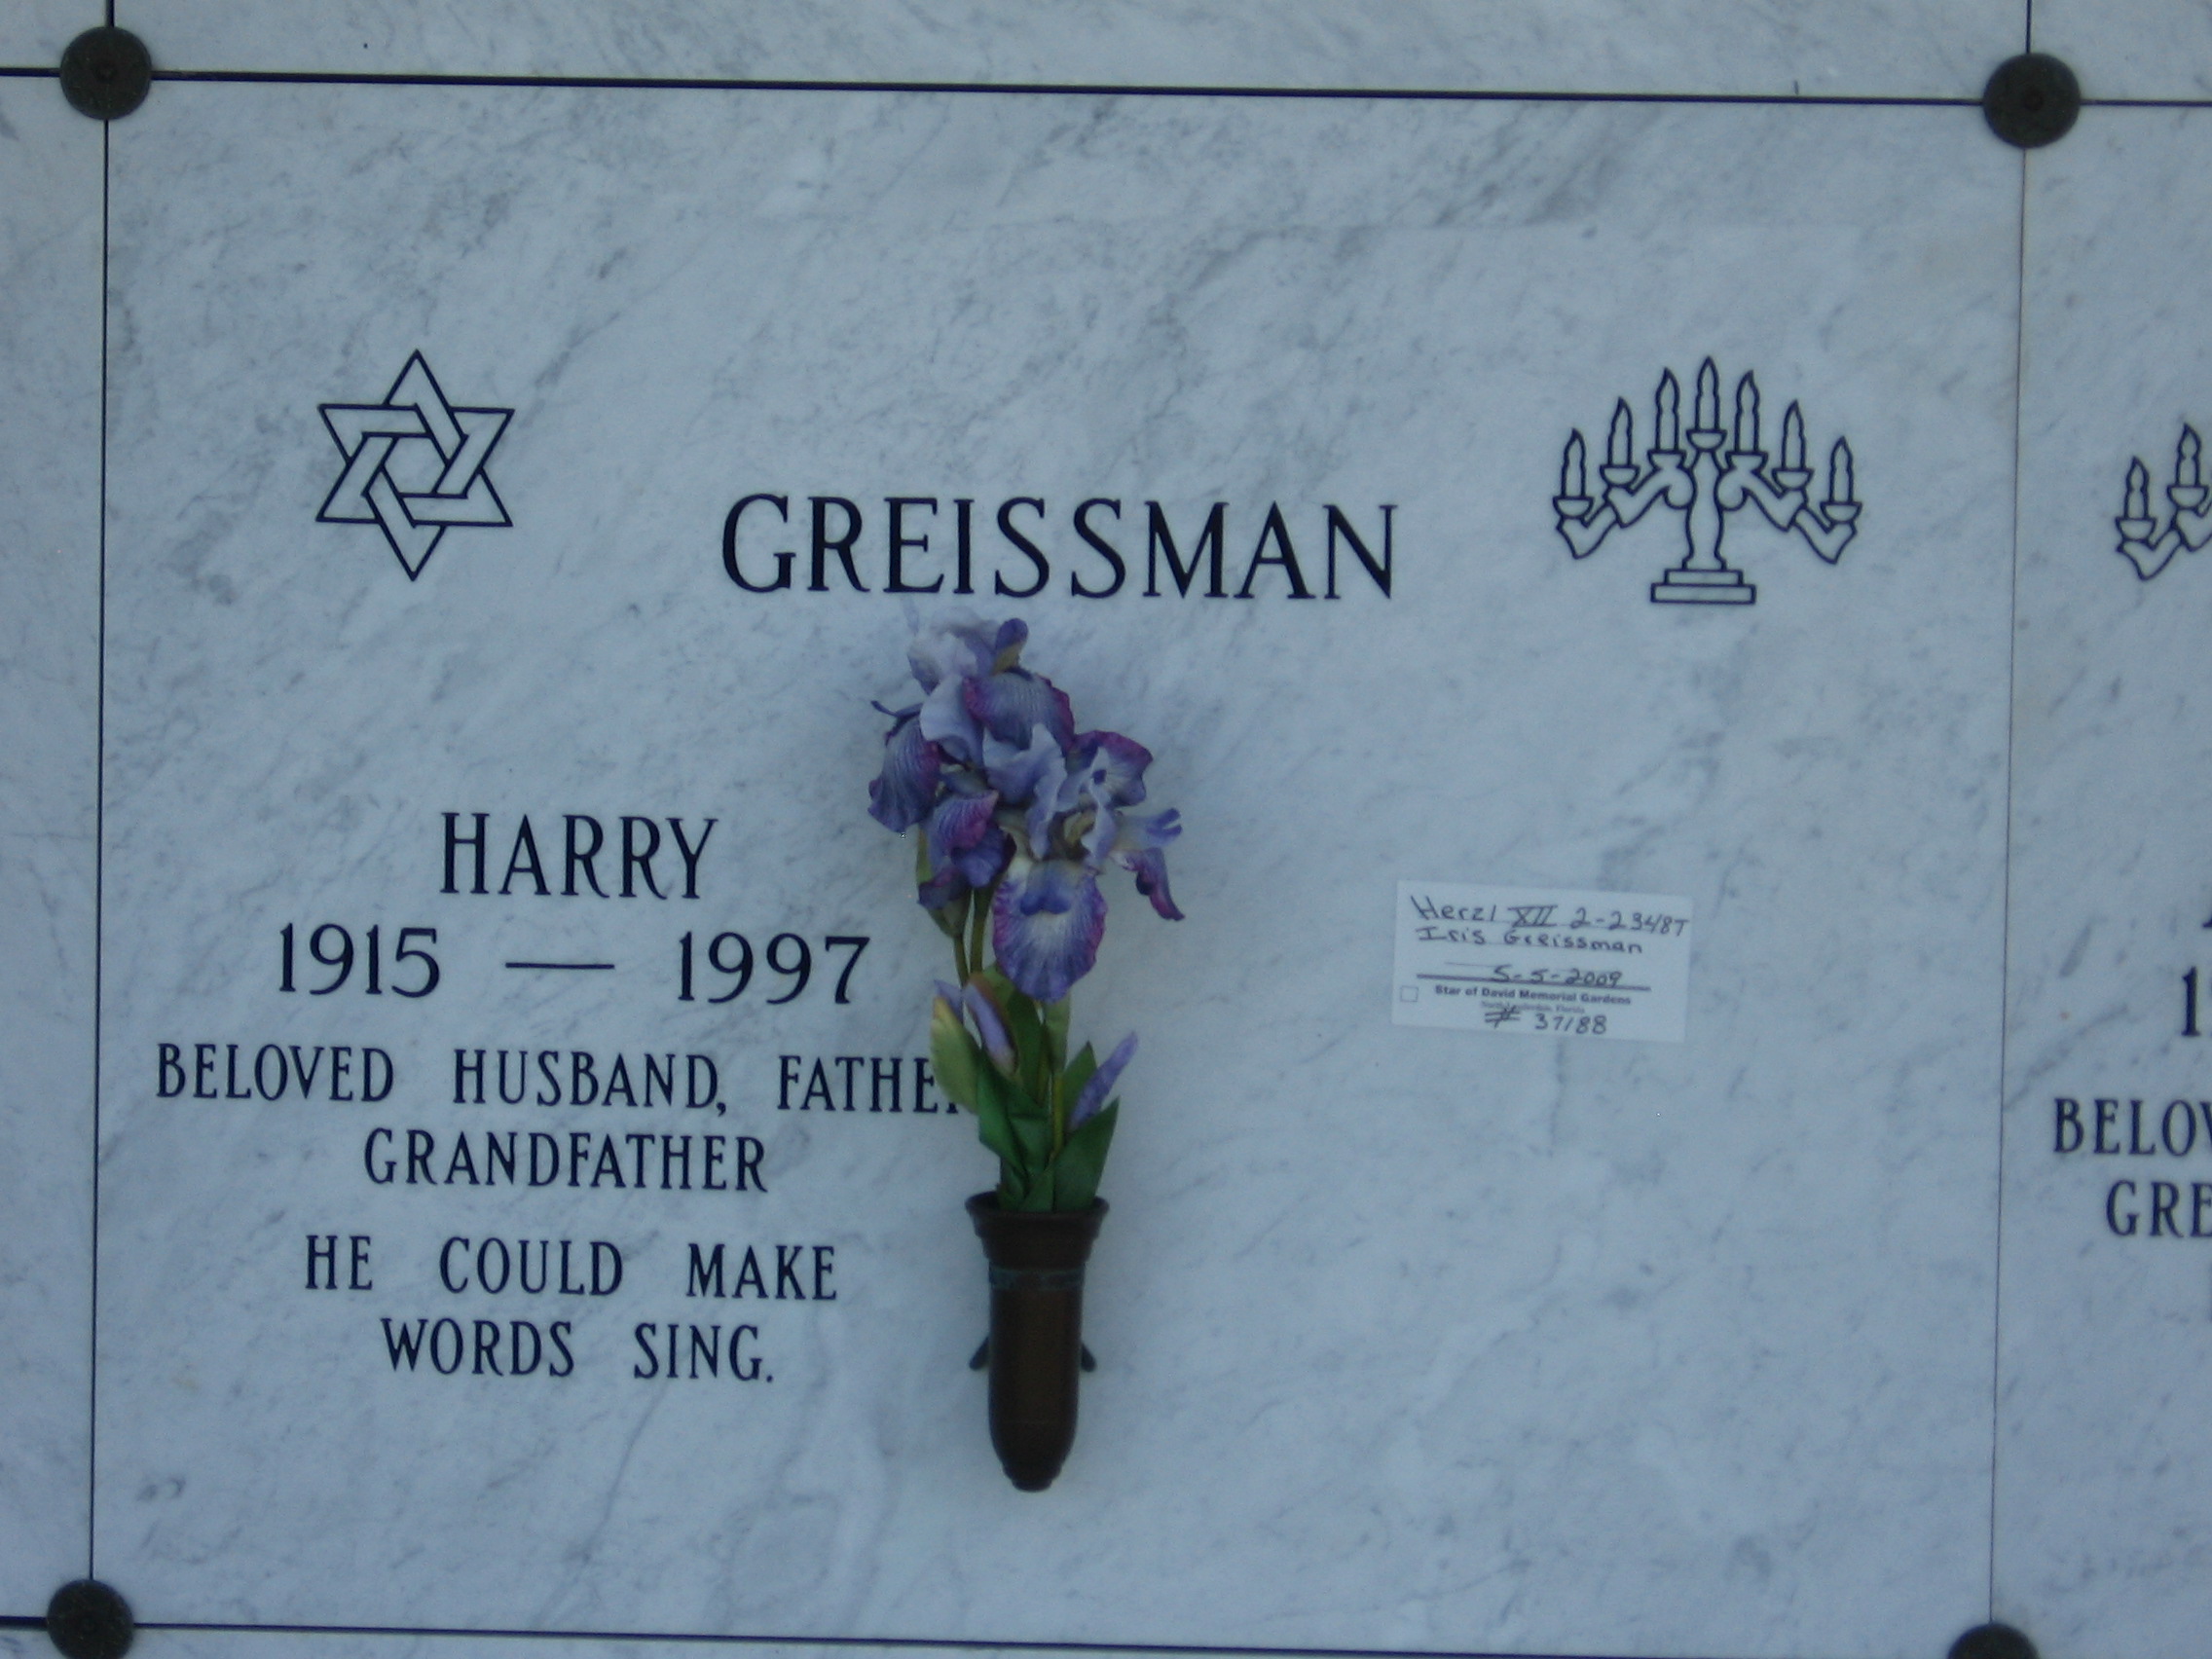 Harry Greissman